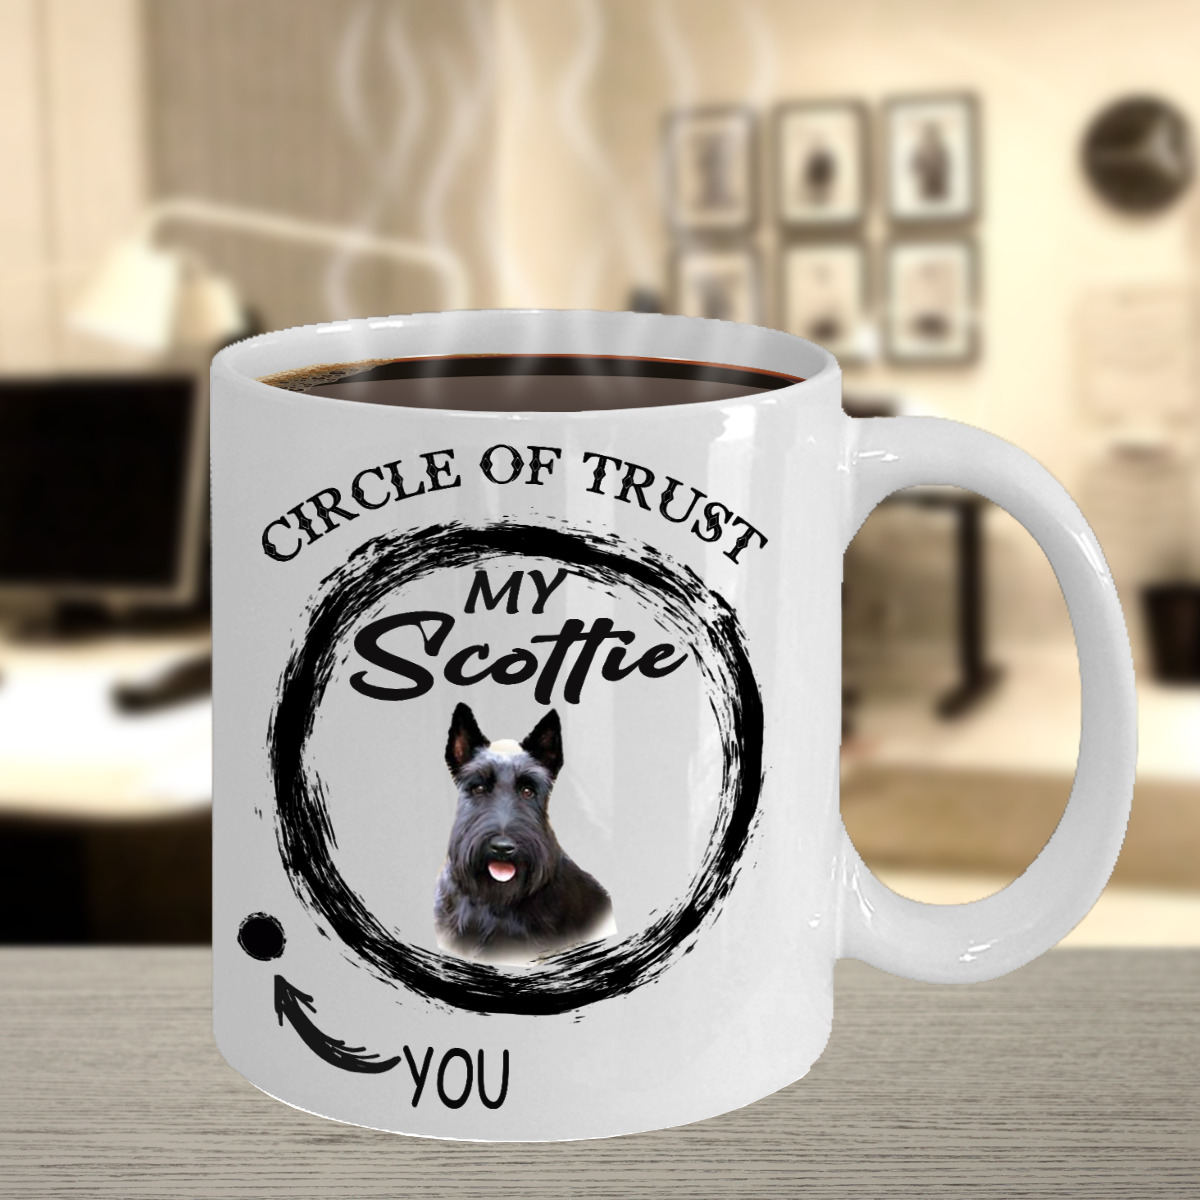 Scottish Terrier,Scottish Terrier Dog,Scotties,Scottie dog,Aberdeenie,Cup,Mugs